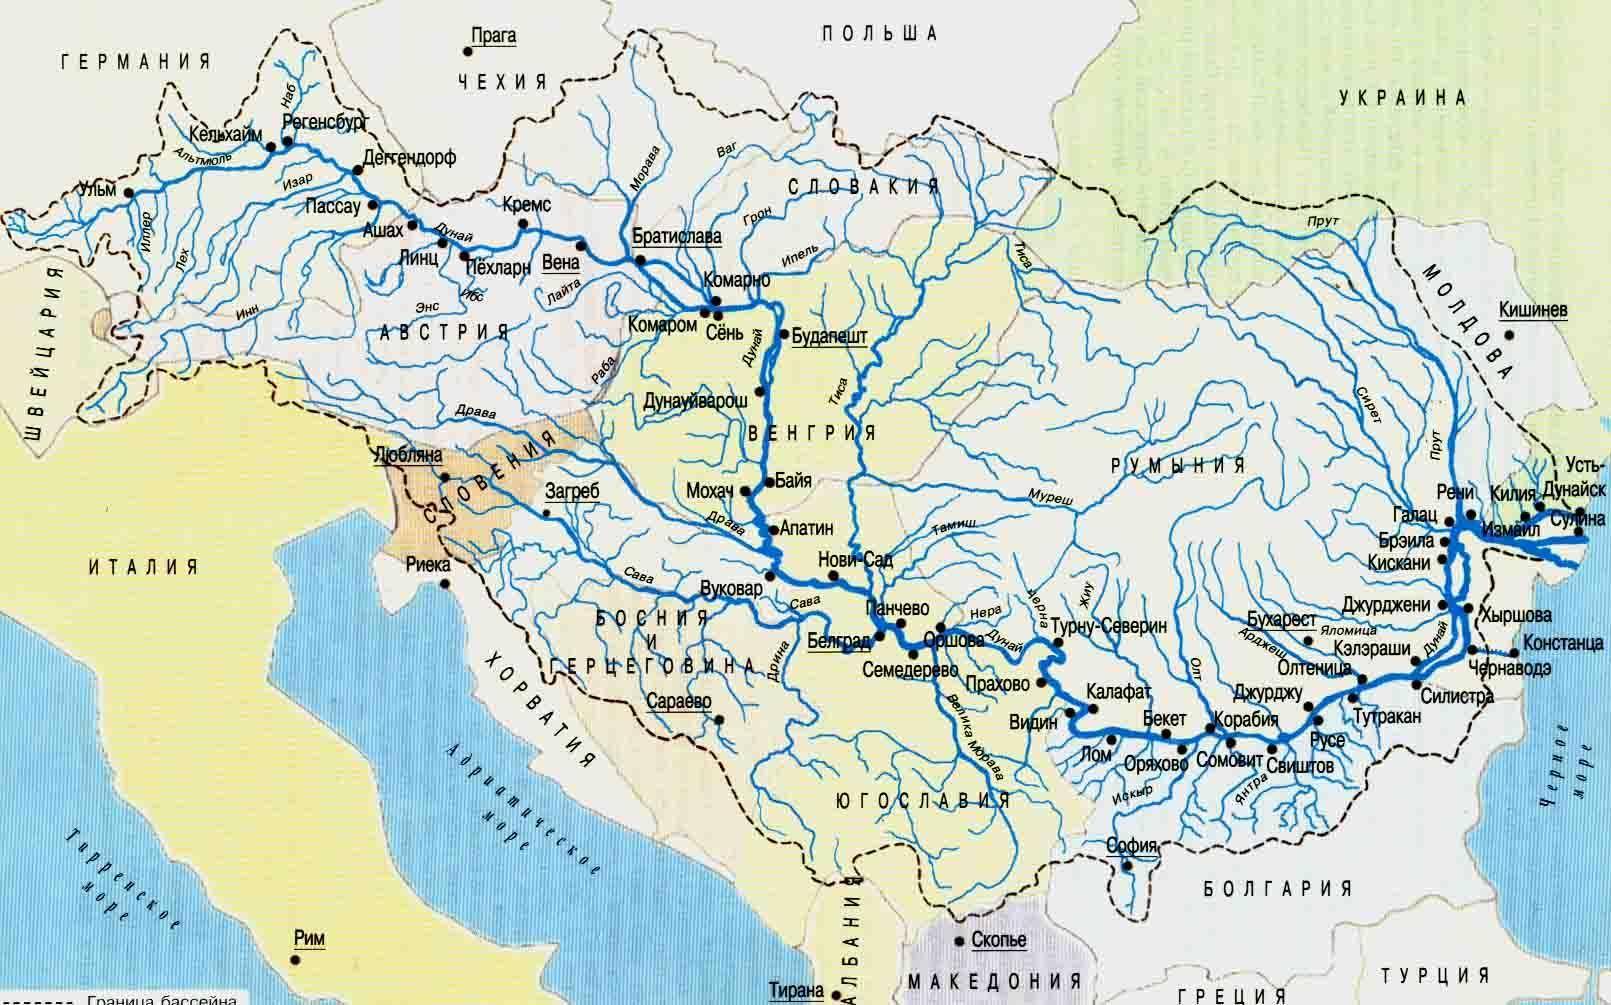 Дунай река бассейн какого океана. Бассейн реки Дунай на карте. Исток реки Дунай на карте. Река Дунай карта географическая. Река Дунай на карте Украины.